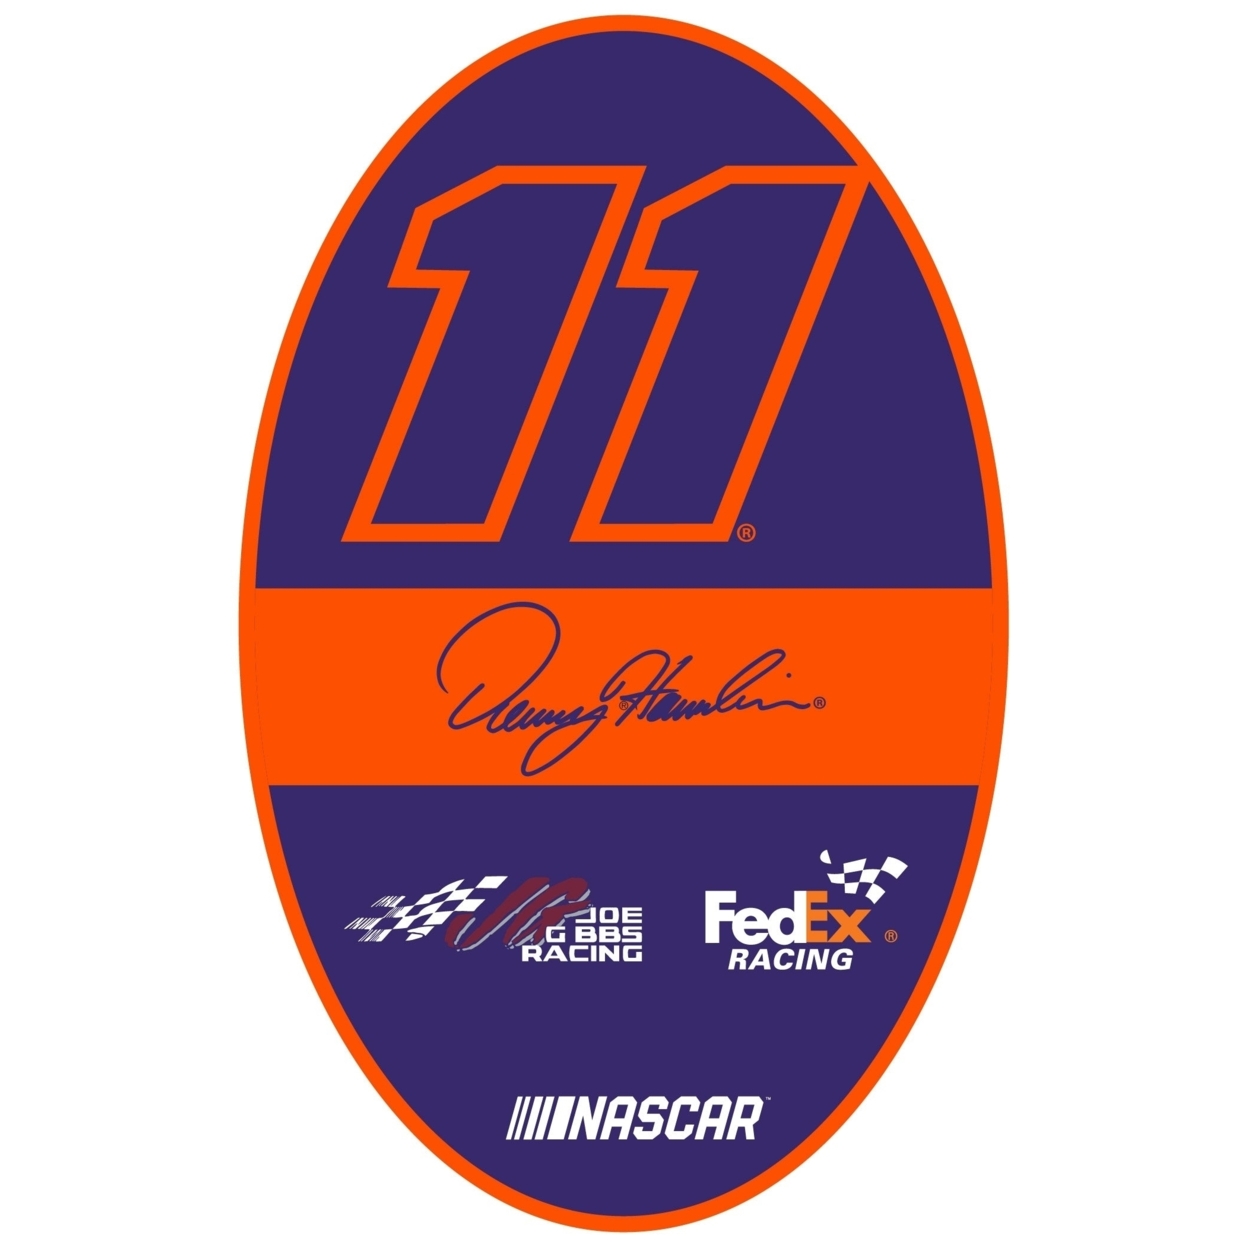 Denny Hamlin #11 NASCAR Oval Magnet New For 2020